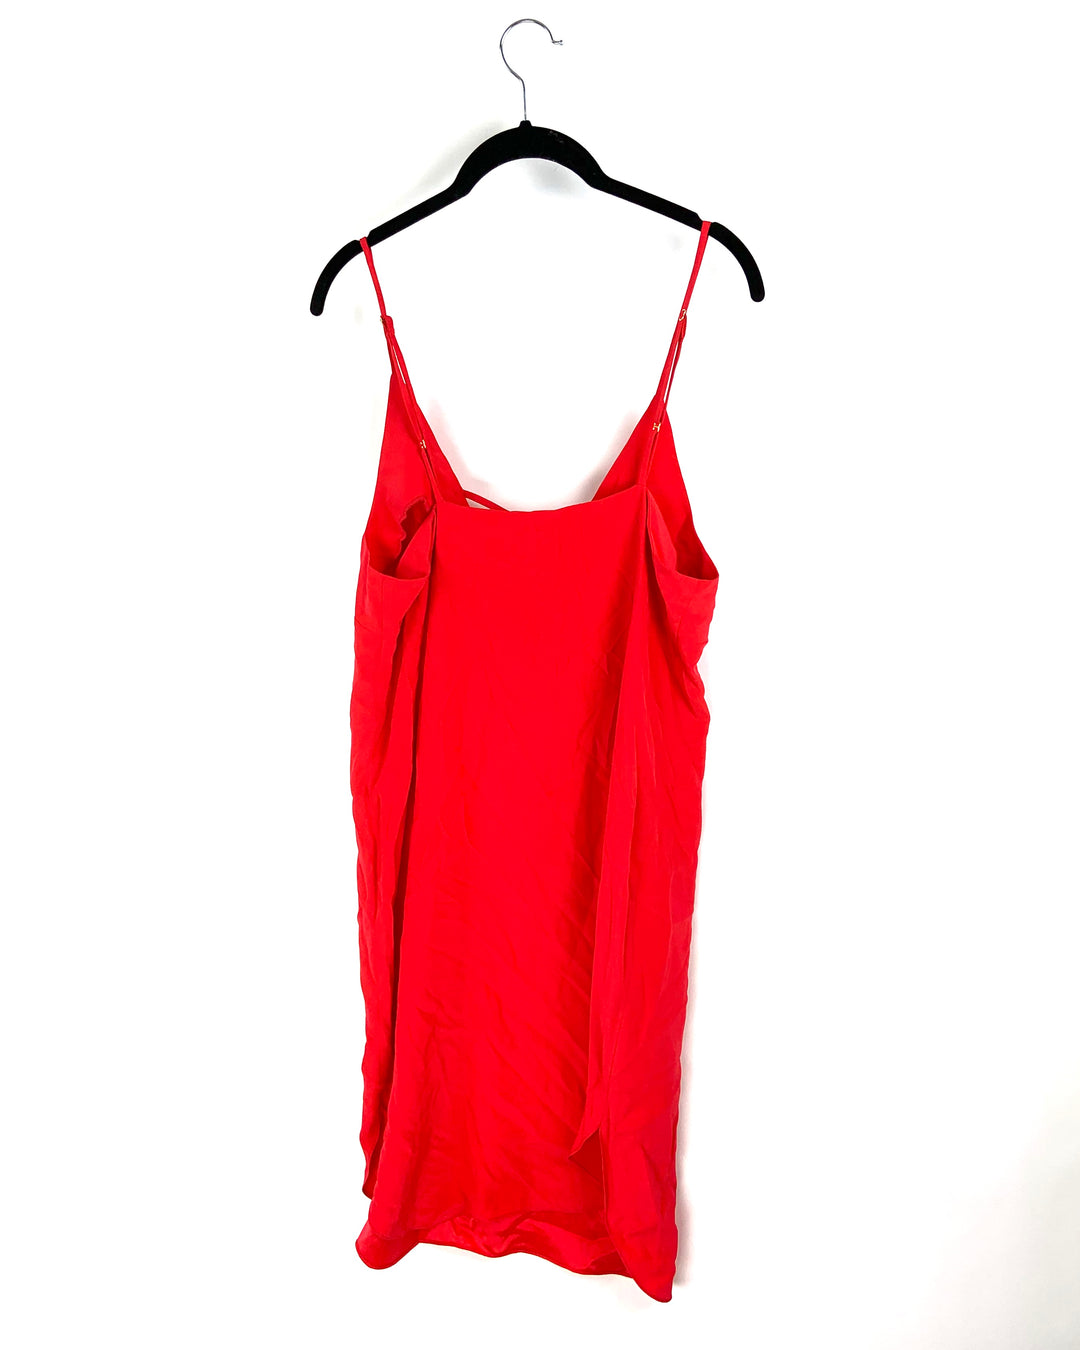 Red Criss Cross Dress - Small